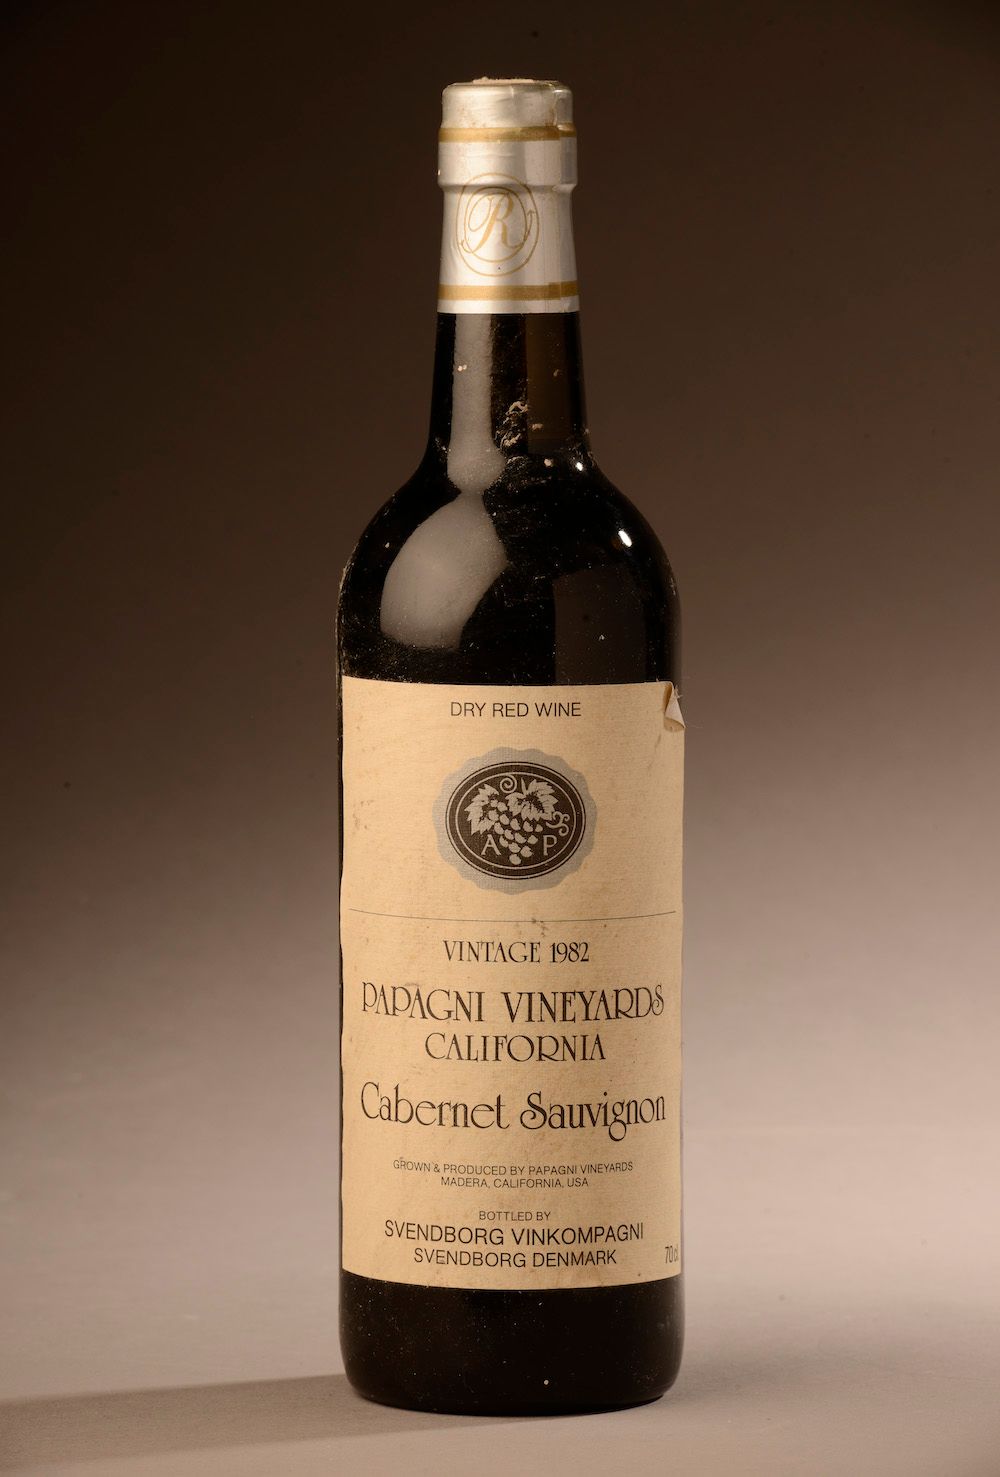 Null 1瓶CABERNET-SAUVIGNON "Madera", Papagni Vineyards 1982 (由丹麦Svendborg装瓶)